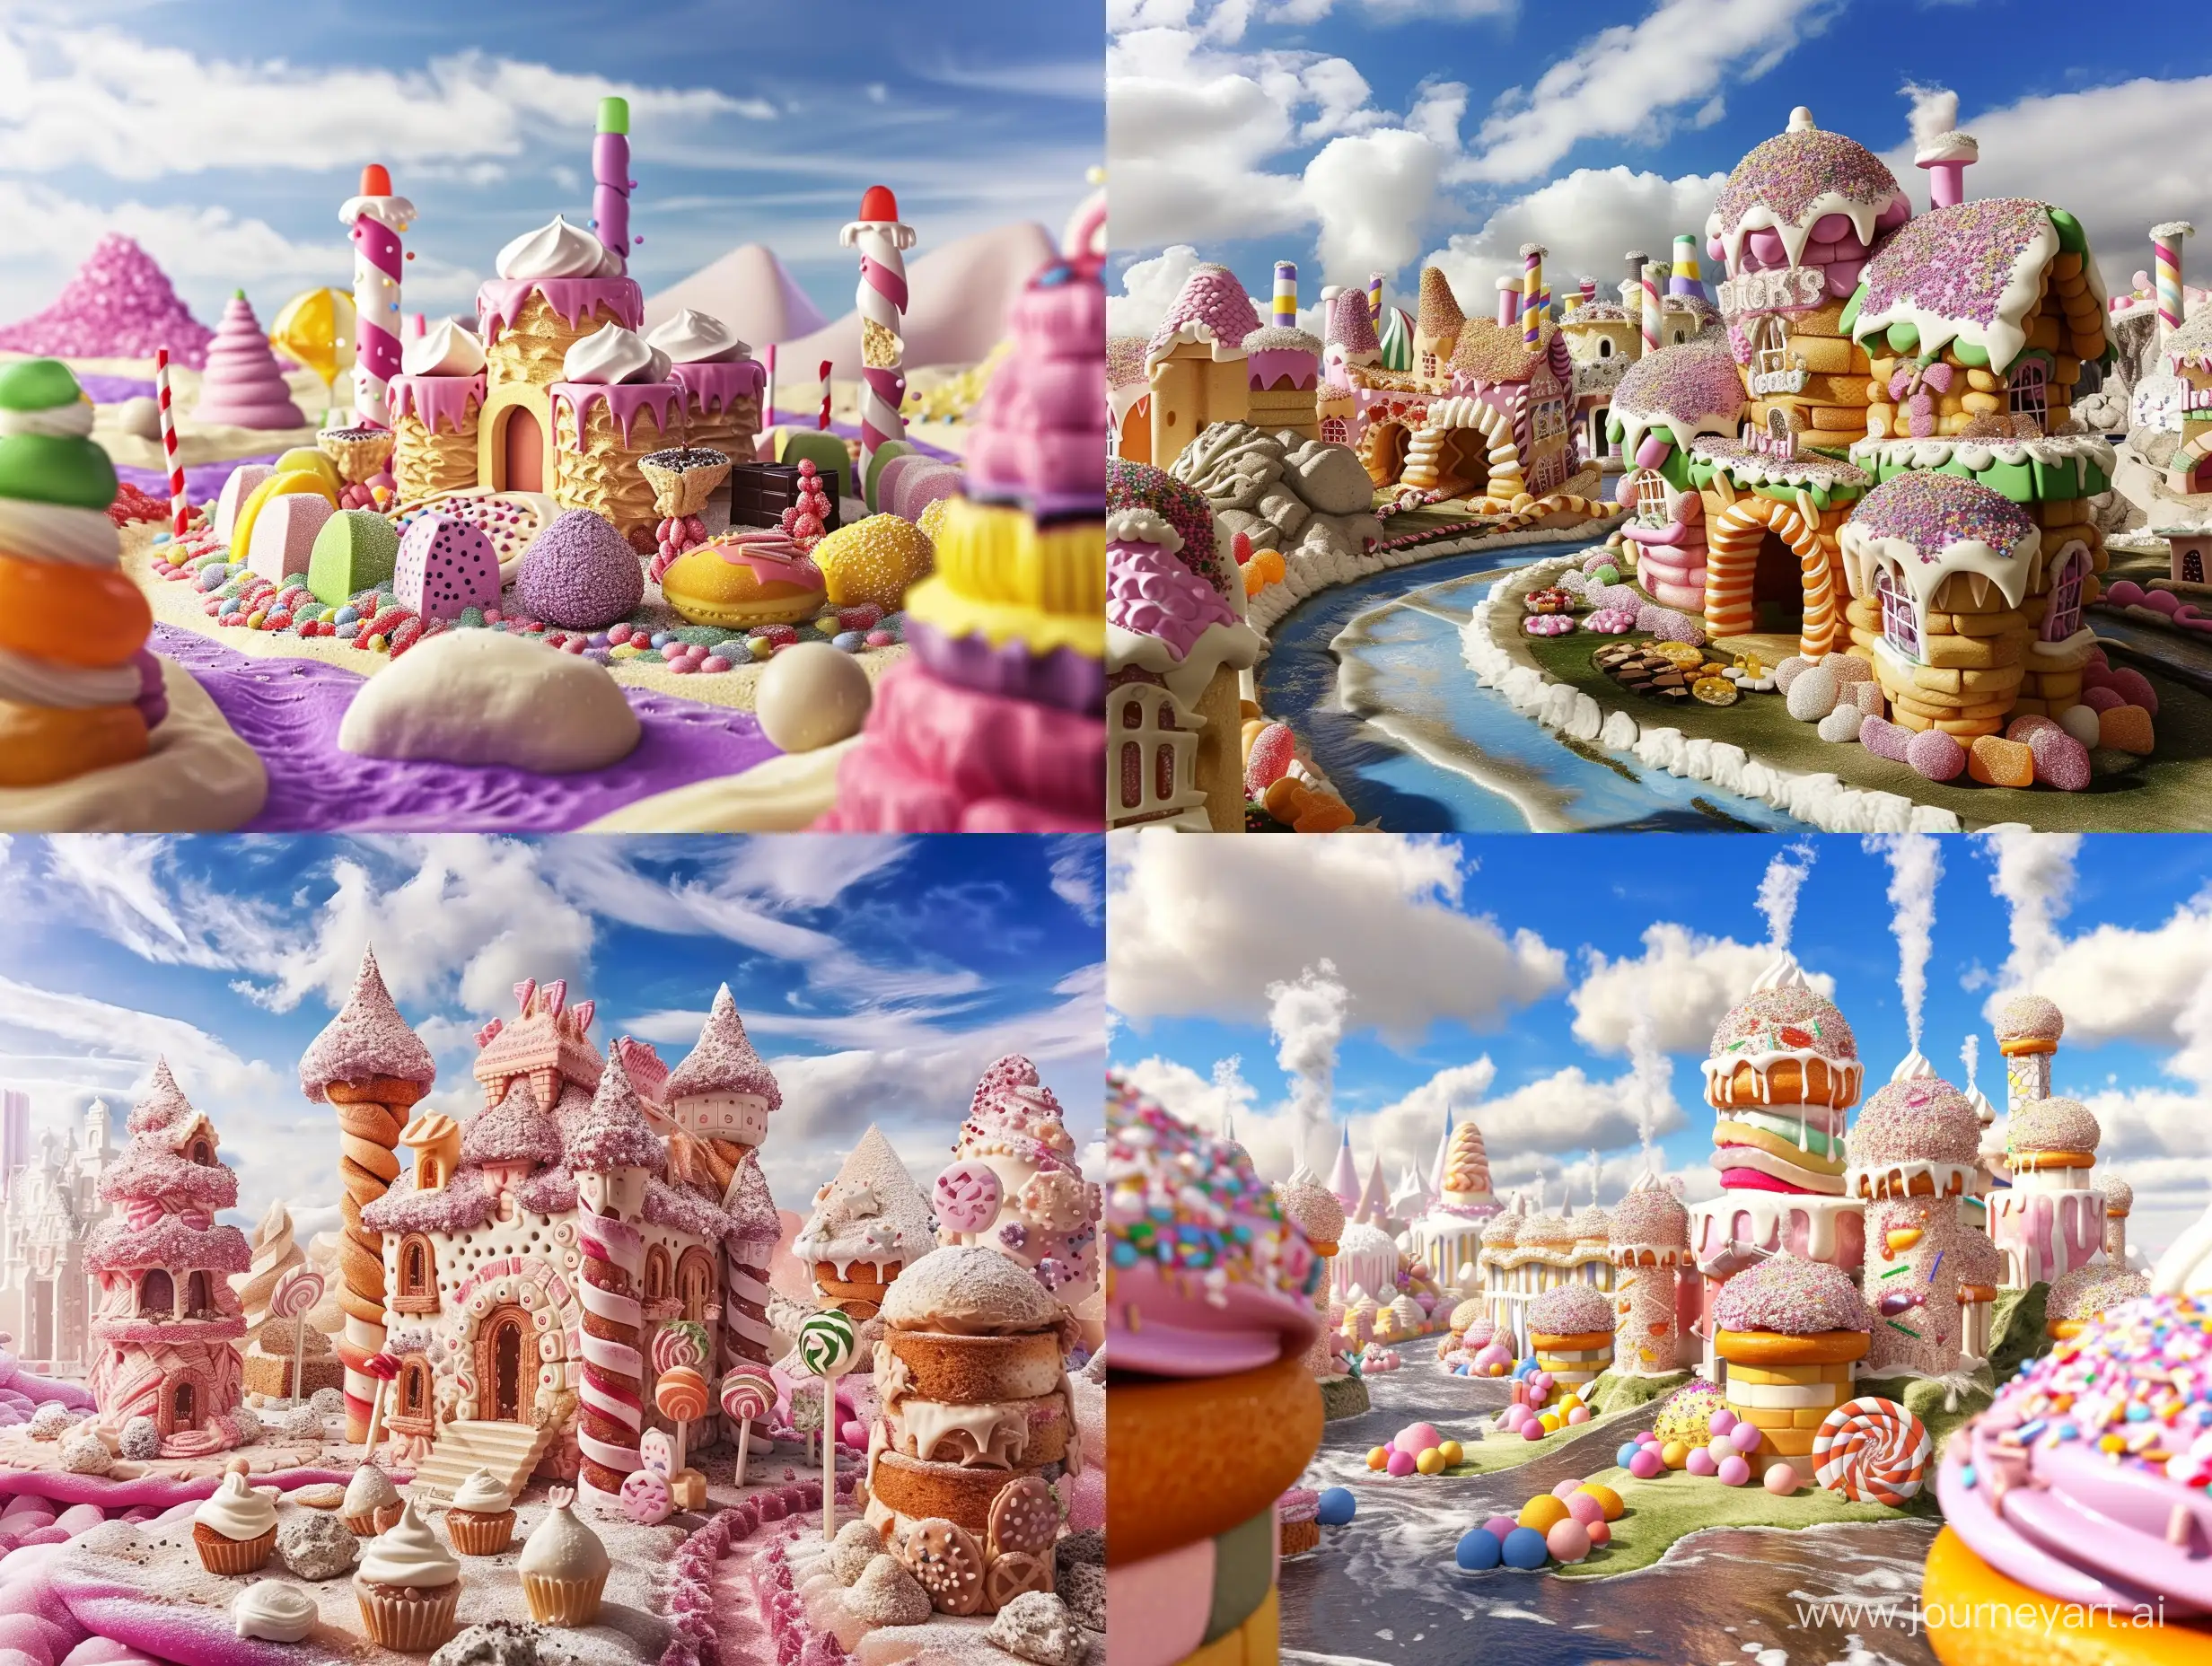 Fantasy-Candy-Kingdom-Whimsical-Dessert-Landscape-with-HighQuality-Details